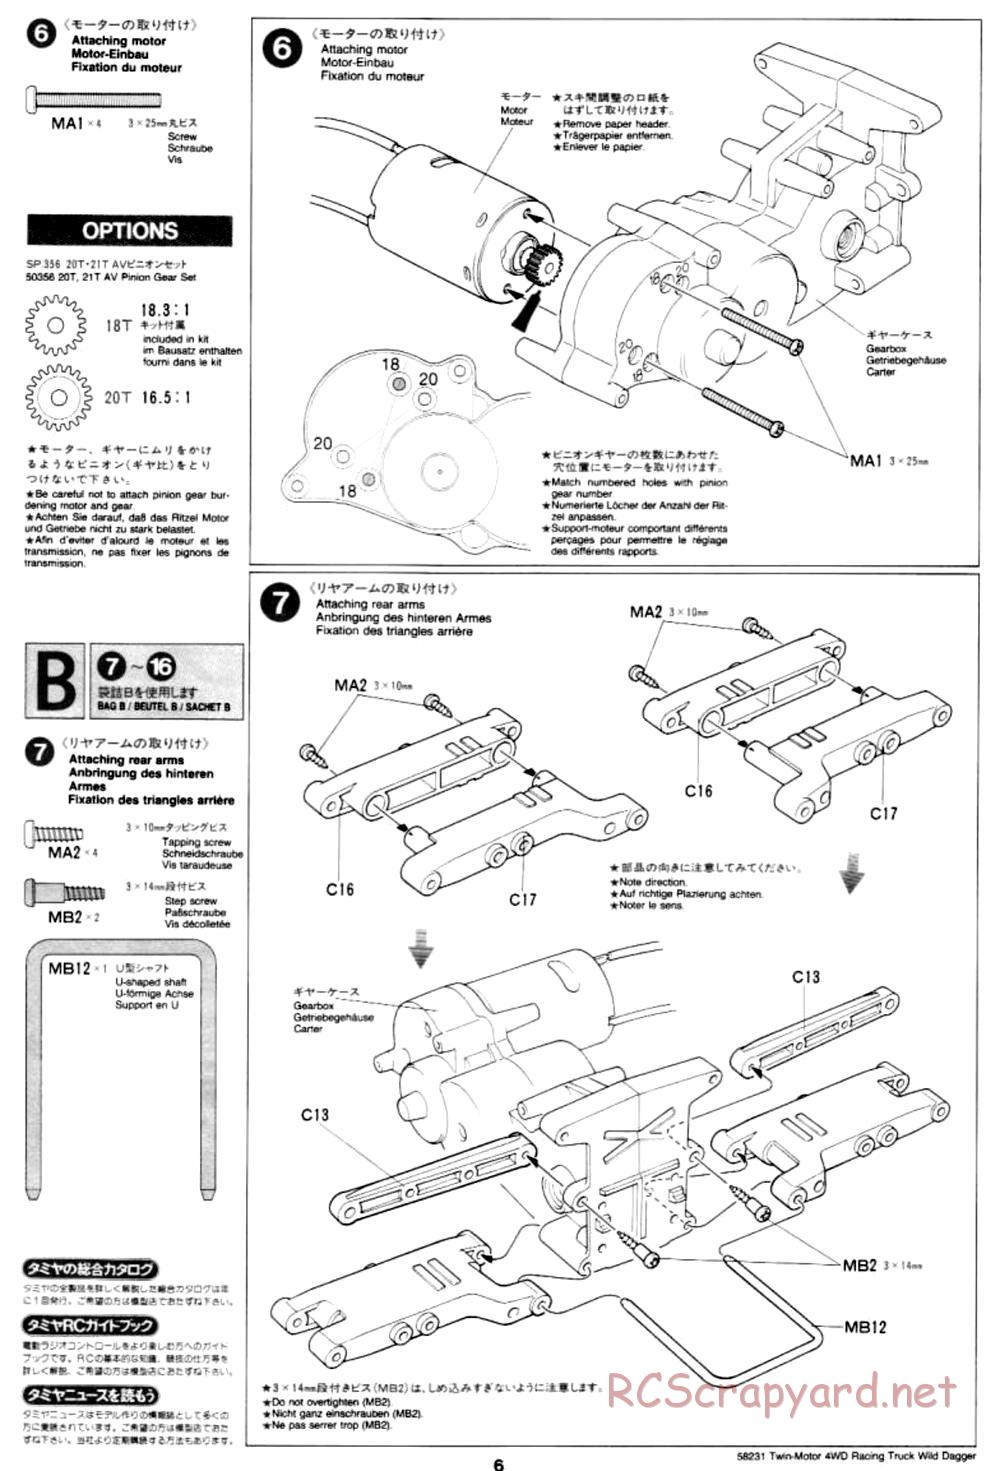 Tamiya - Wild Dagger - WR-01 Chassis - Manual - Page 6